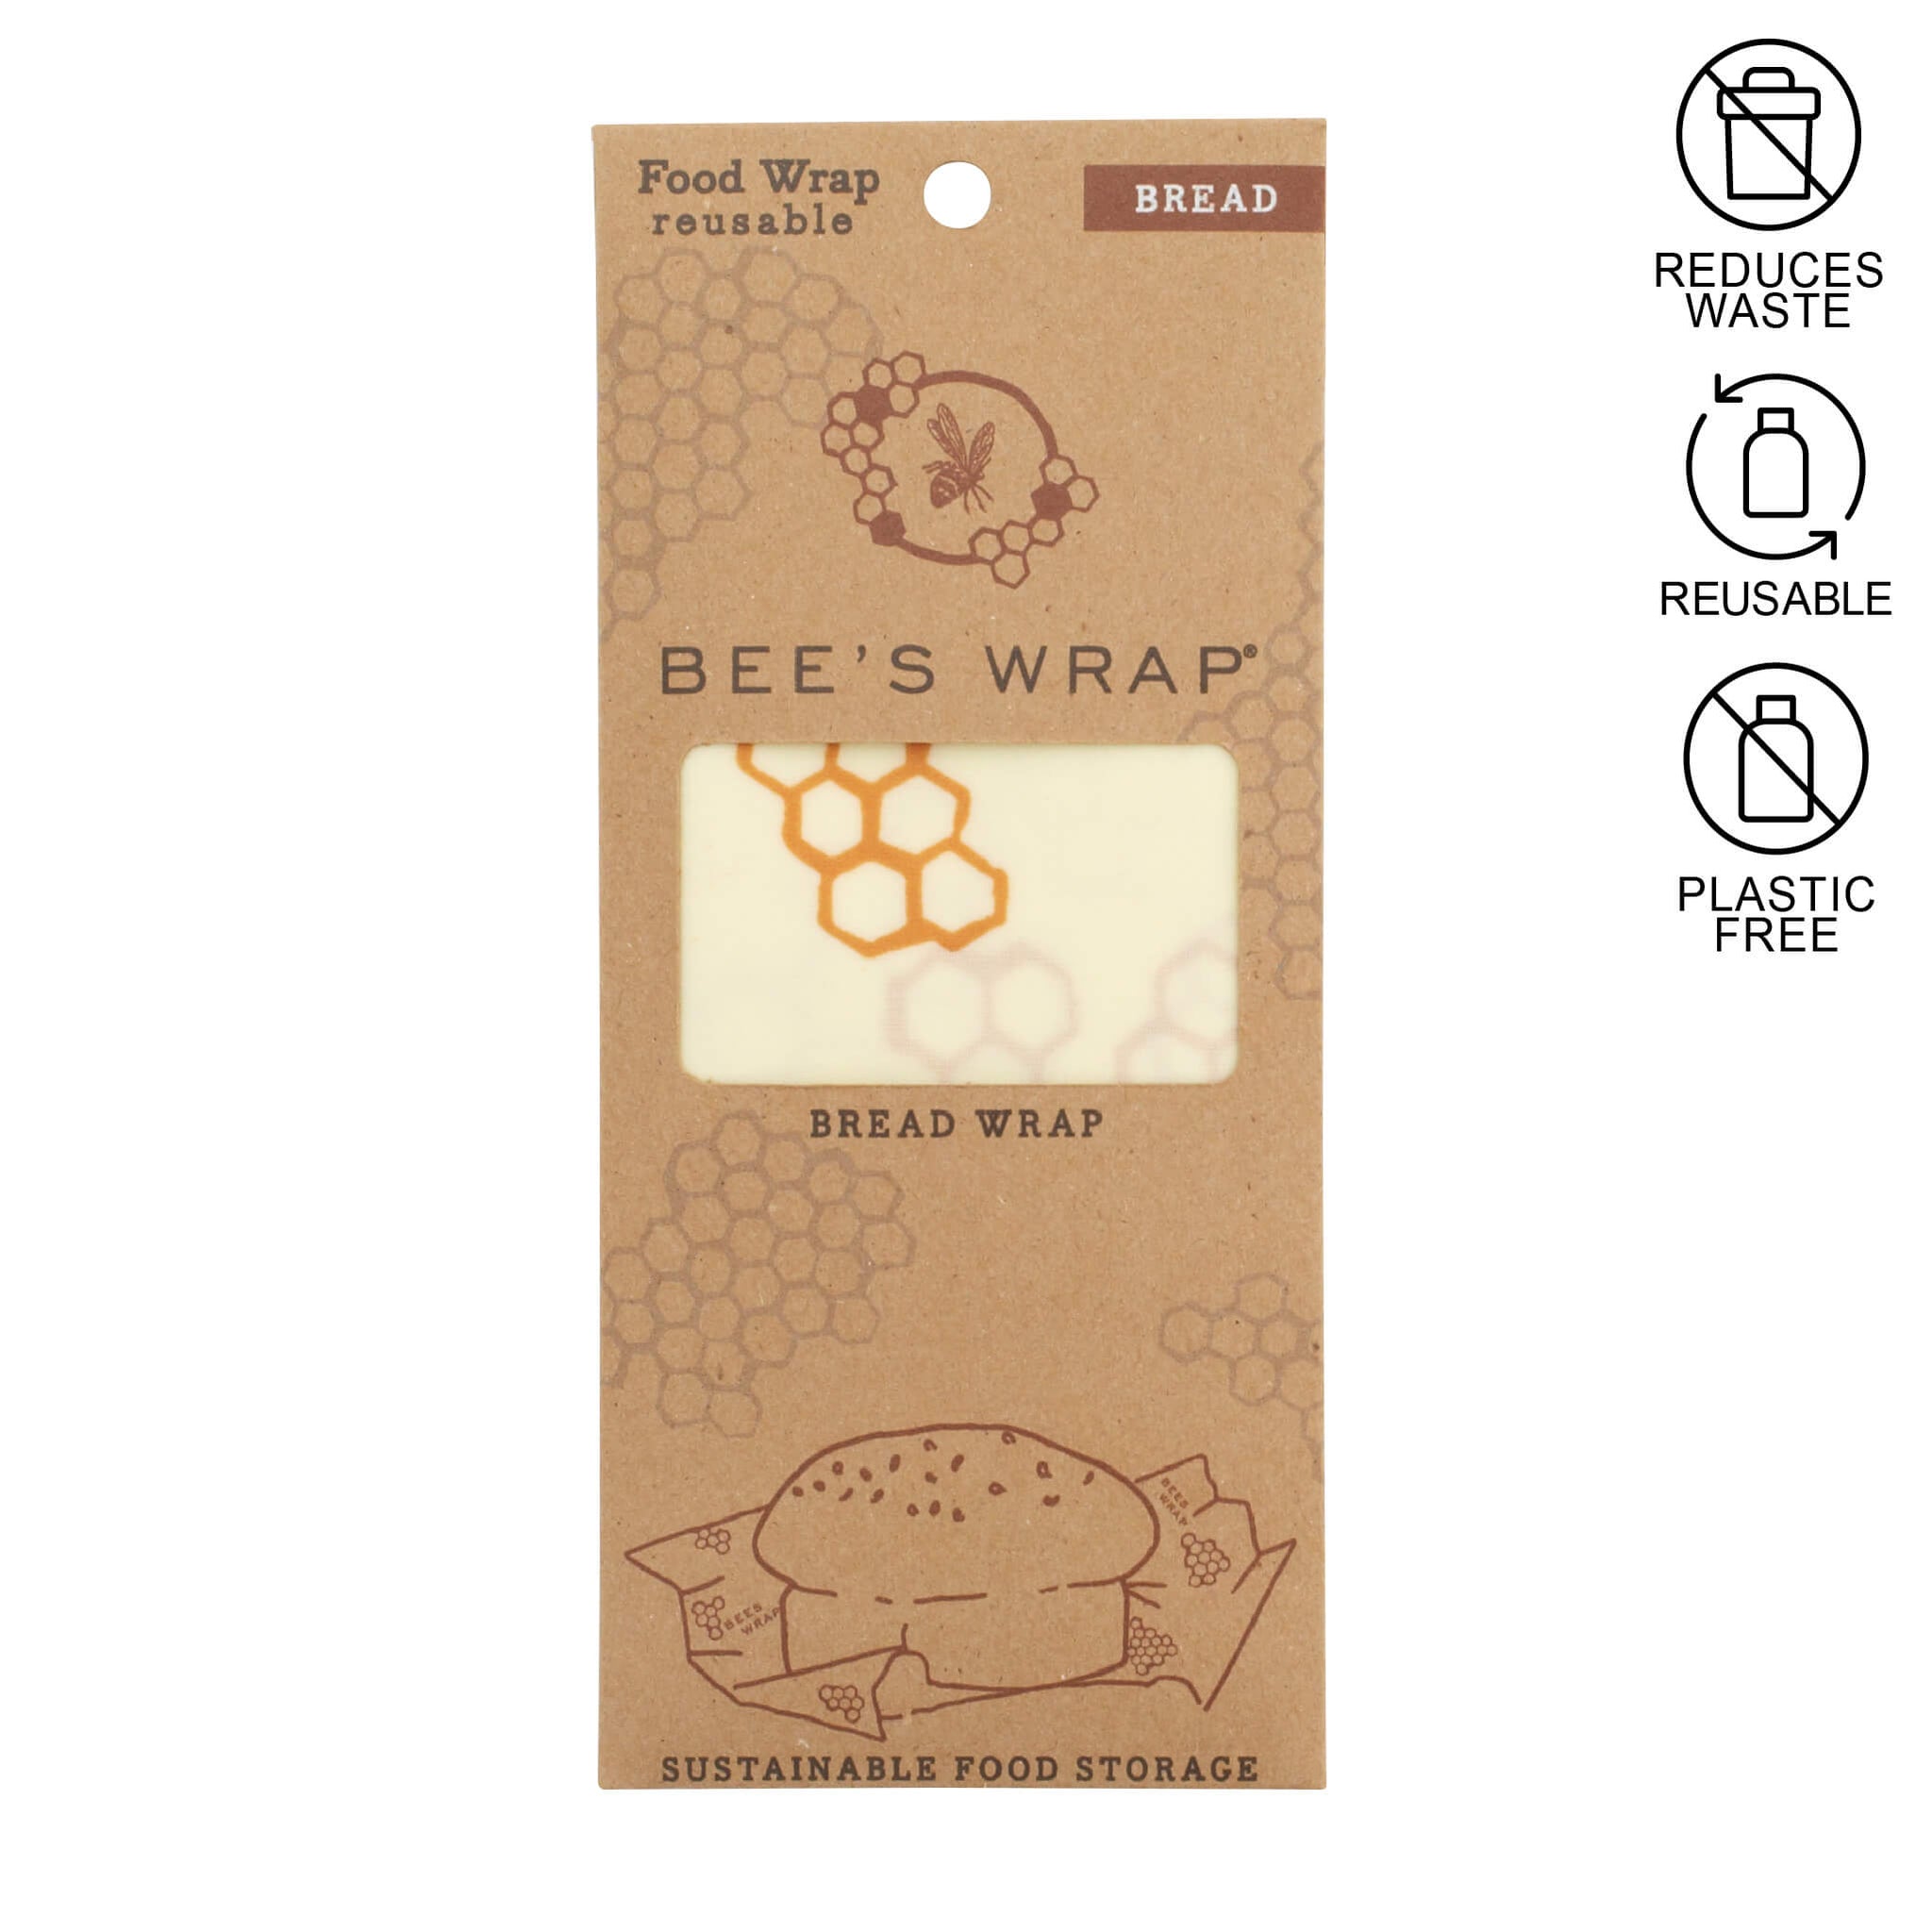 XL beeswax wrap inside packaging